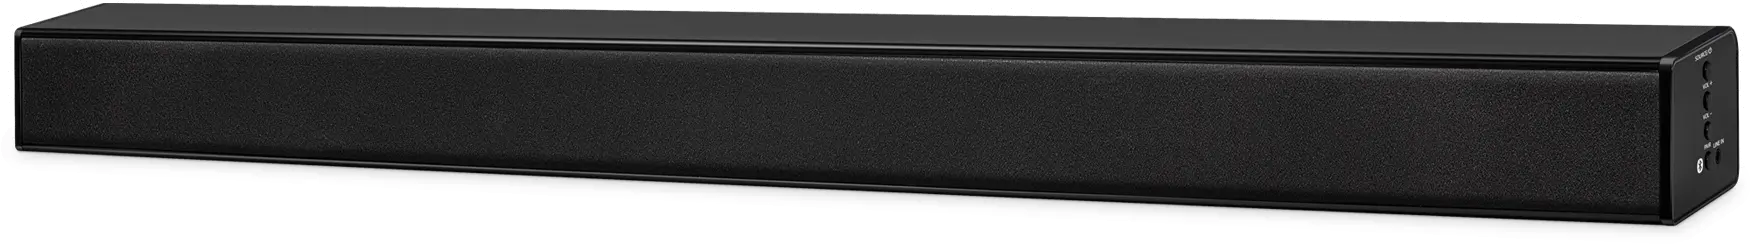 40 Black Sound Bar with Bluetooth